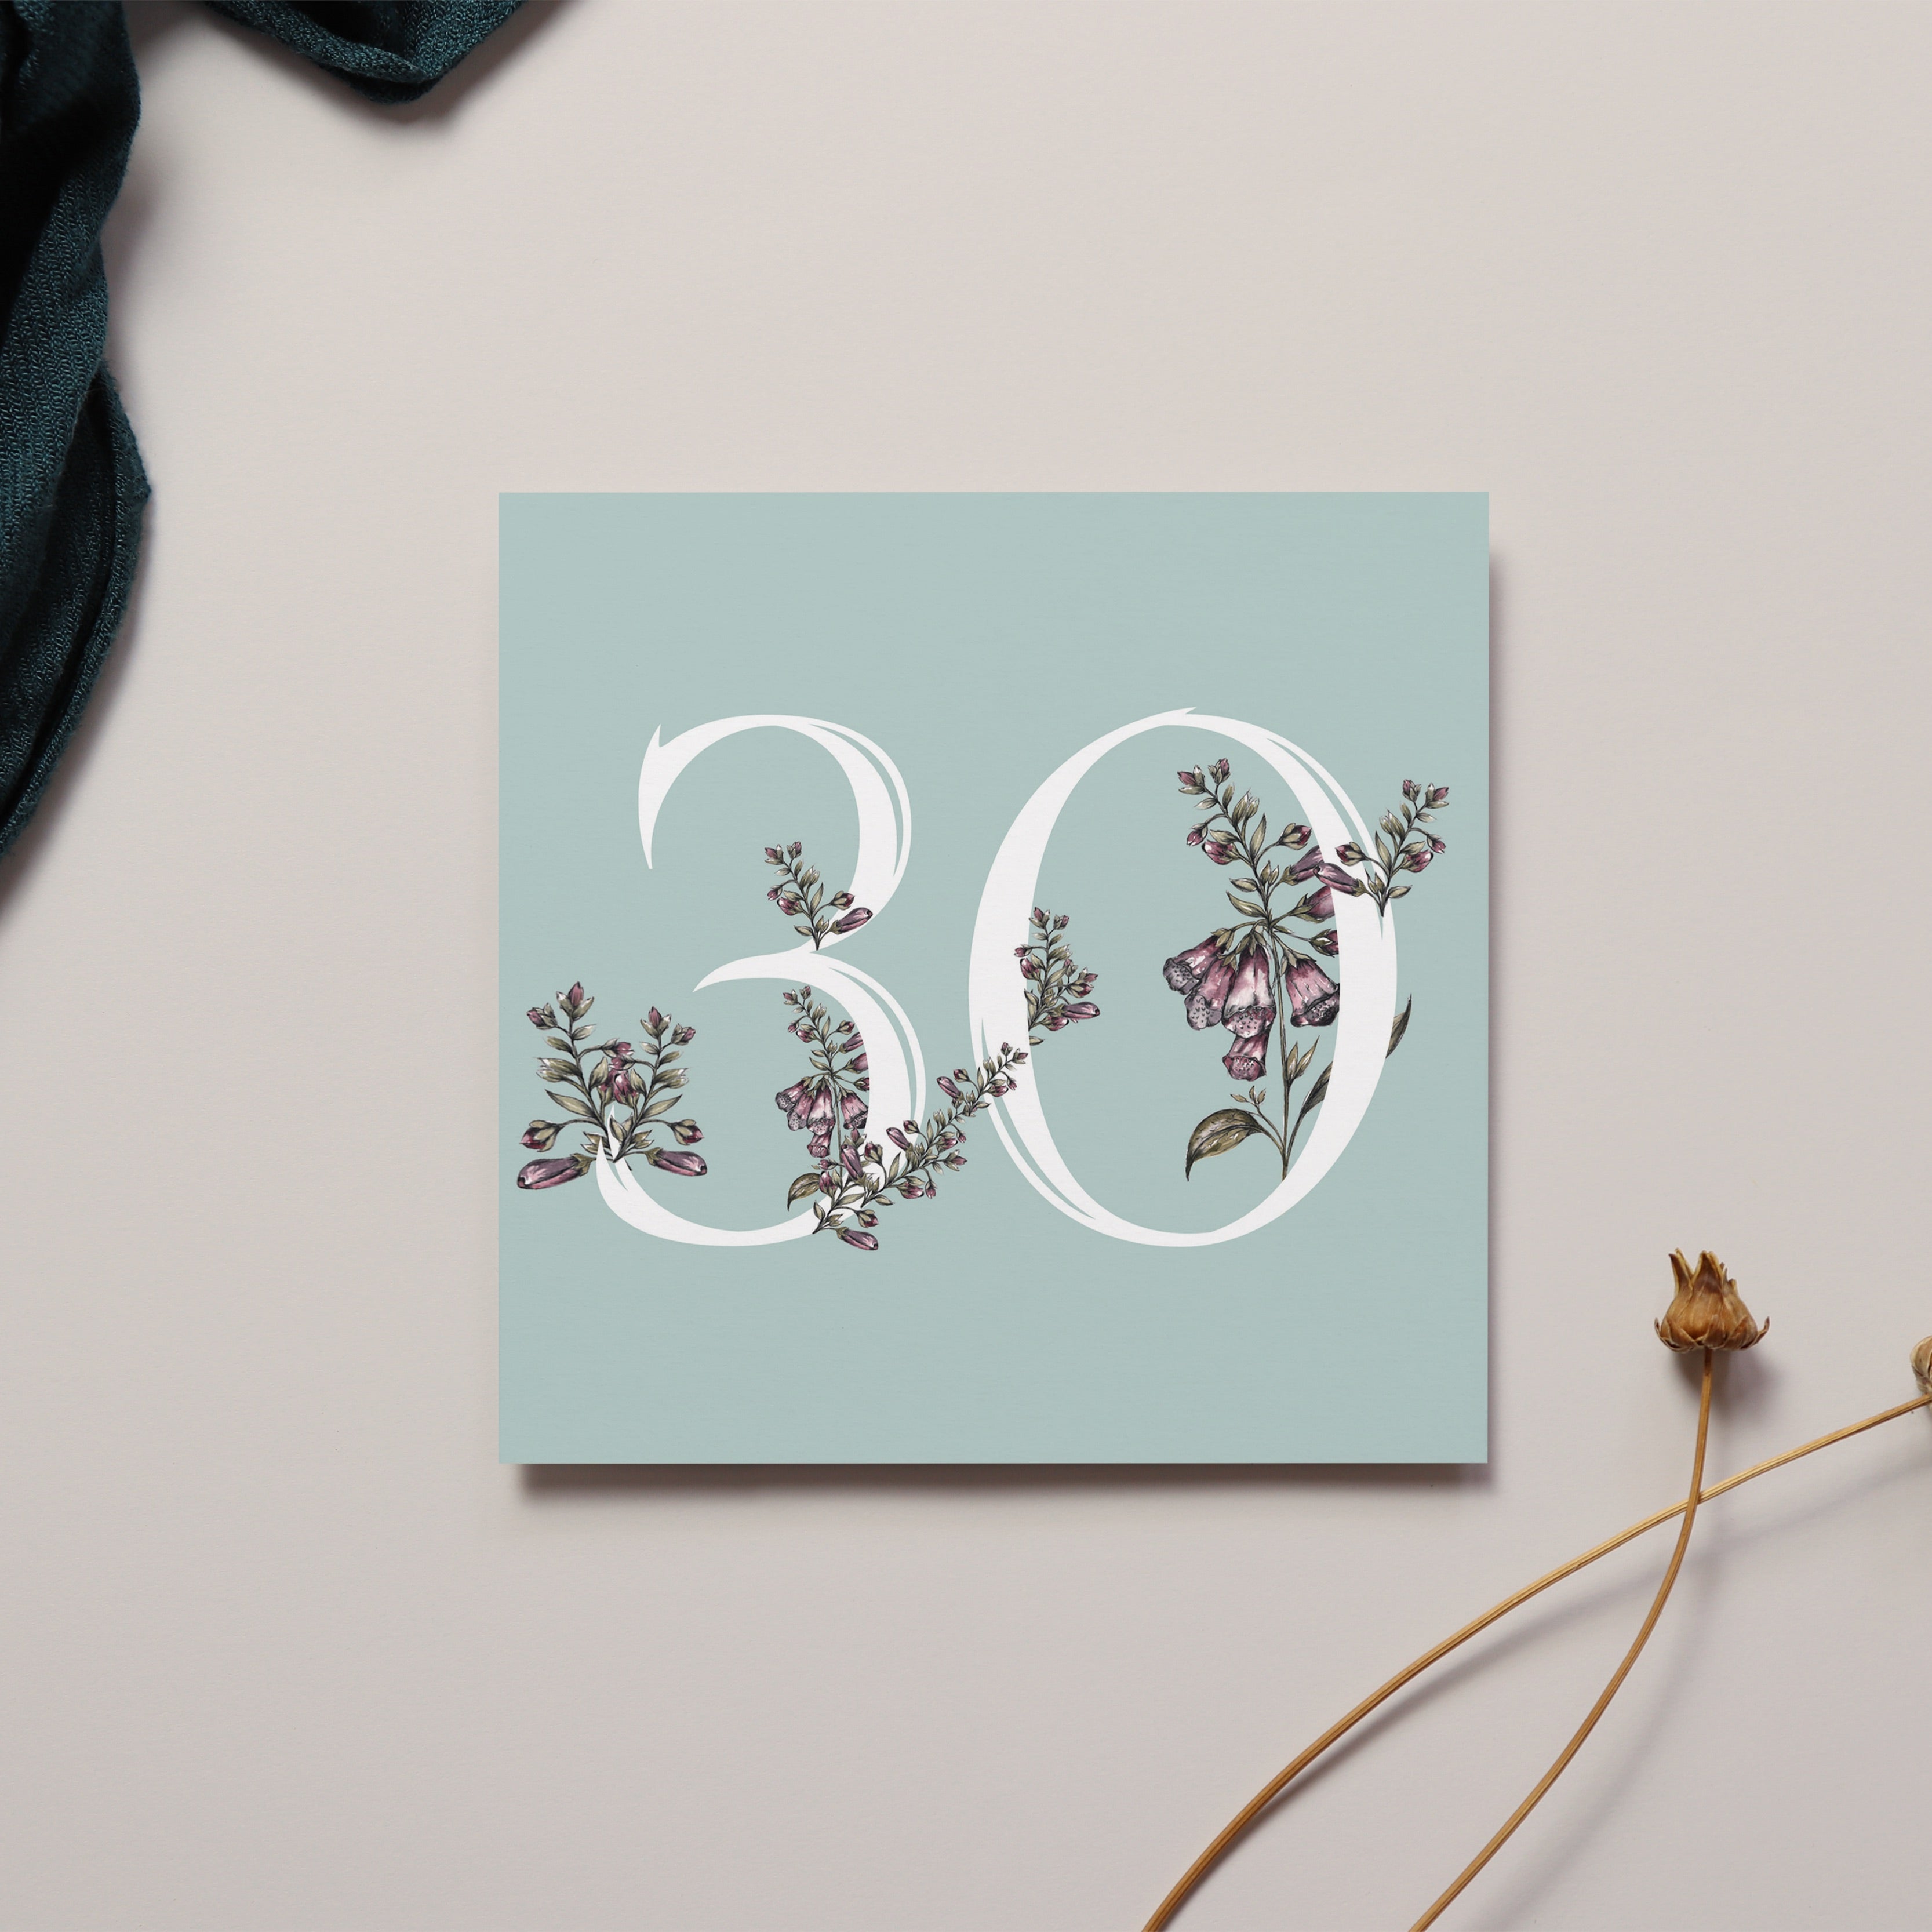 Floral 30th Birthday Card